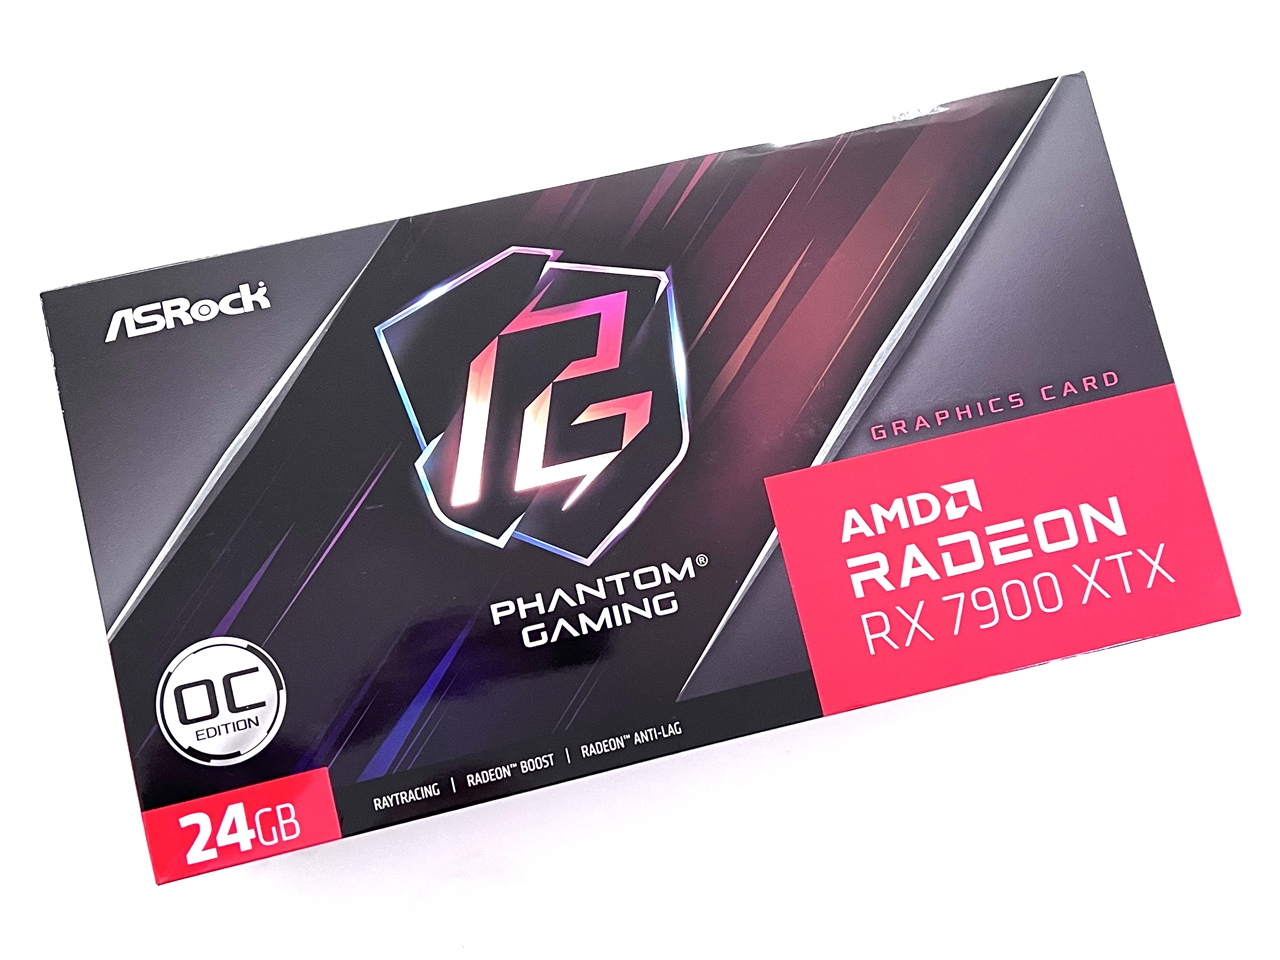 ASRock Phantom Gaming OC Radeon RX 7900 XTX 24 GB Video Card